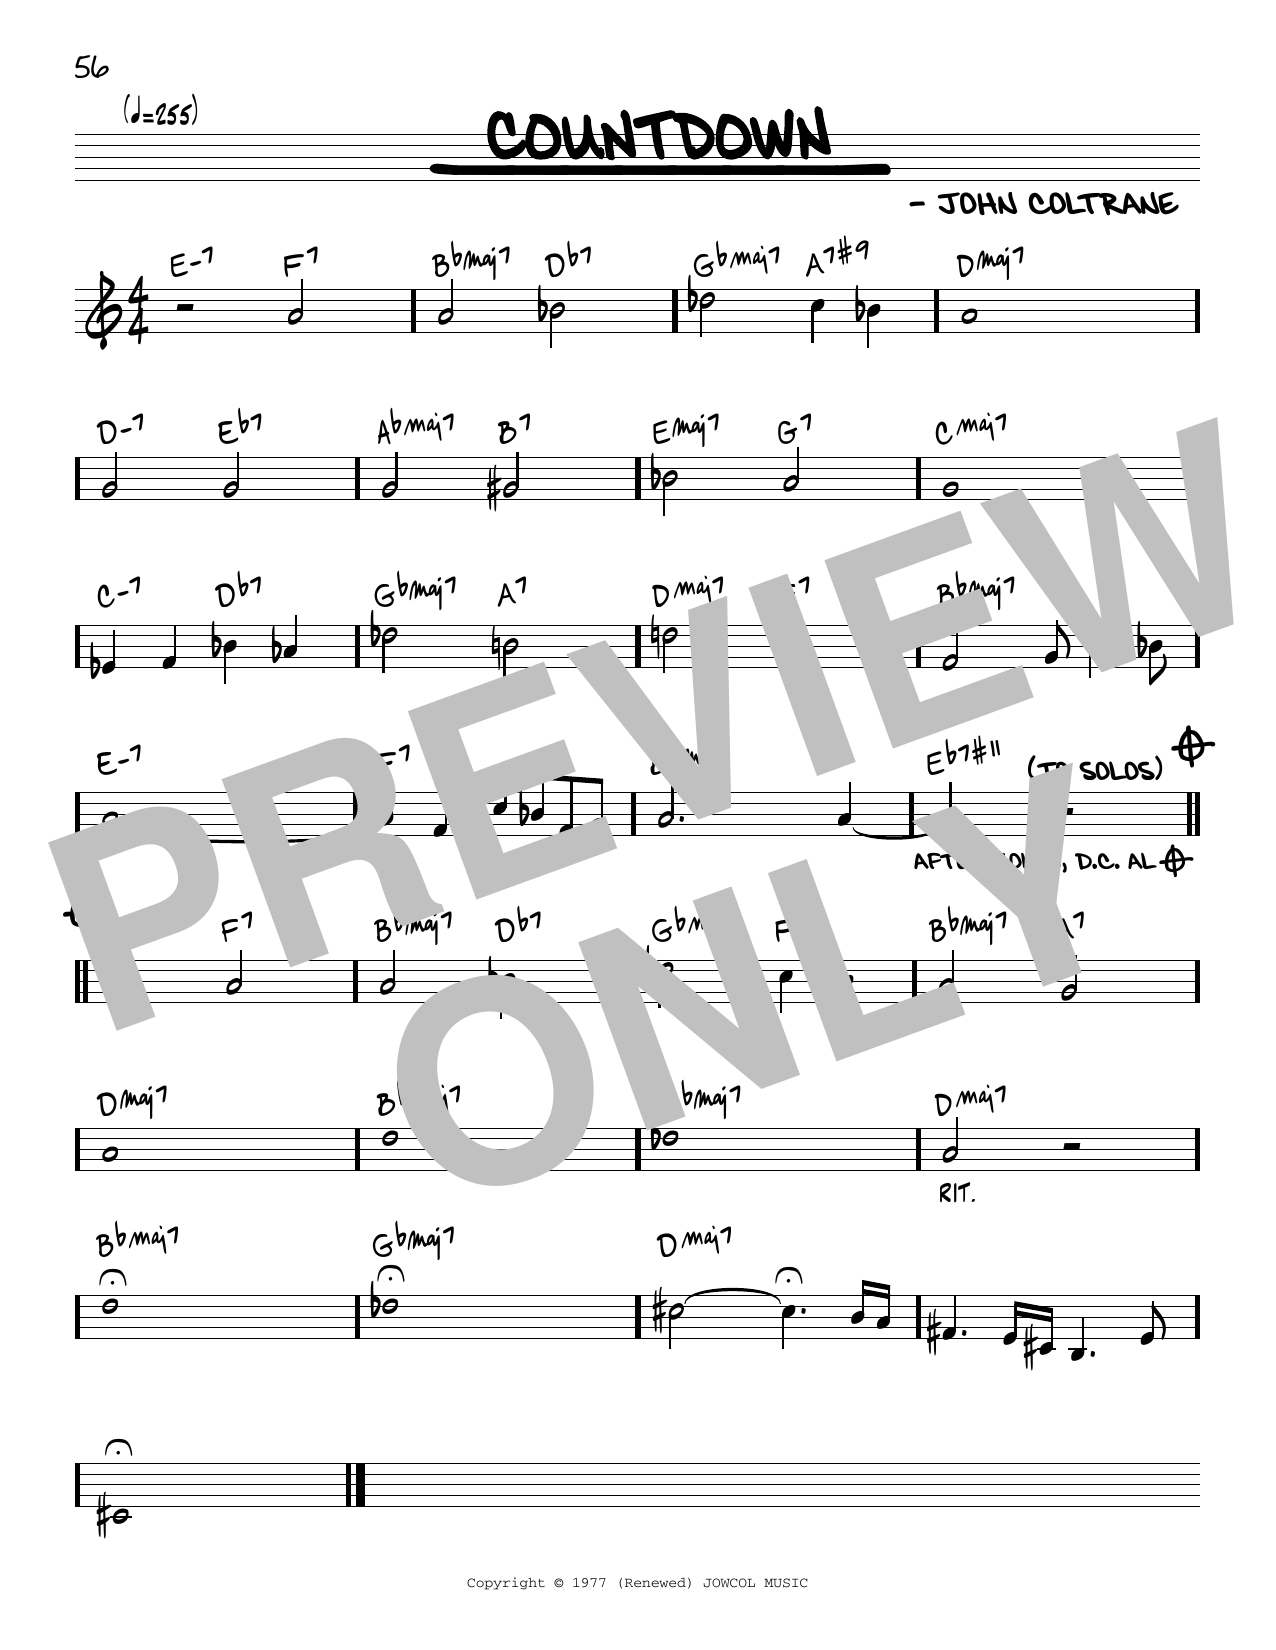 John Coltrane Countdown Sheet Music Notes & Chords for Tenor Sax Transcription - Download or Print PDF